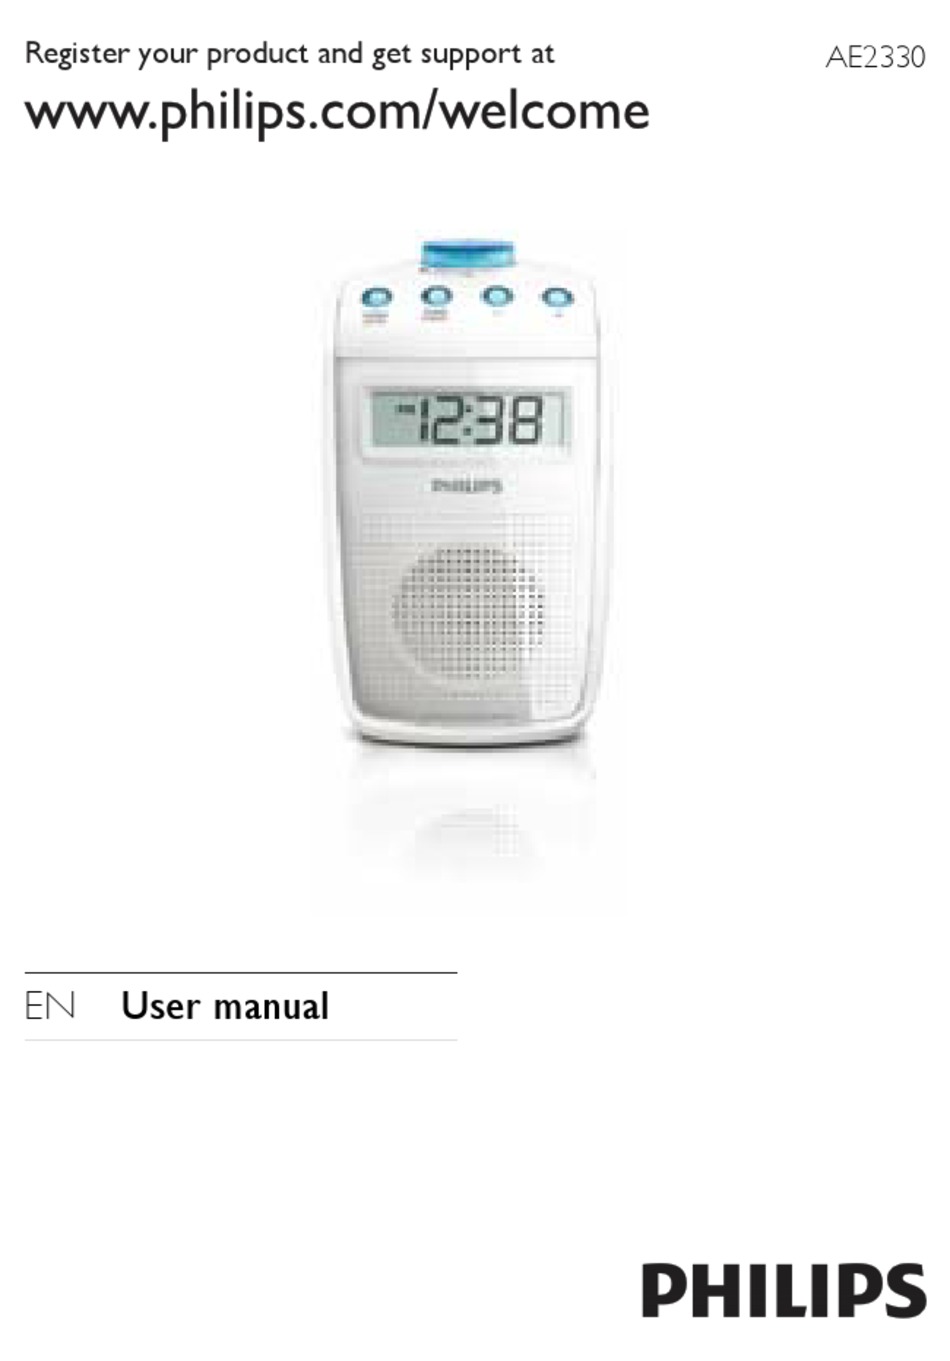 PHILIPS PORTABLE RADIO USER | ManualsLib